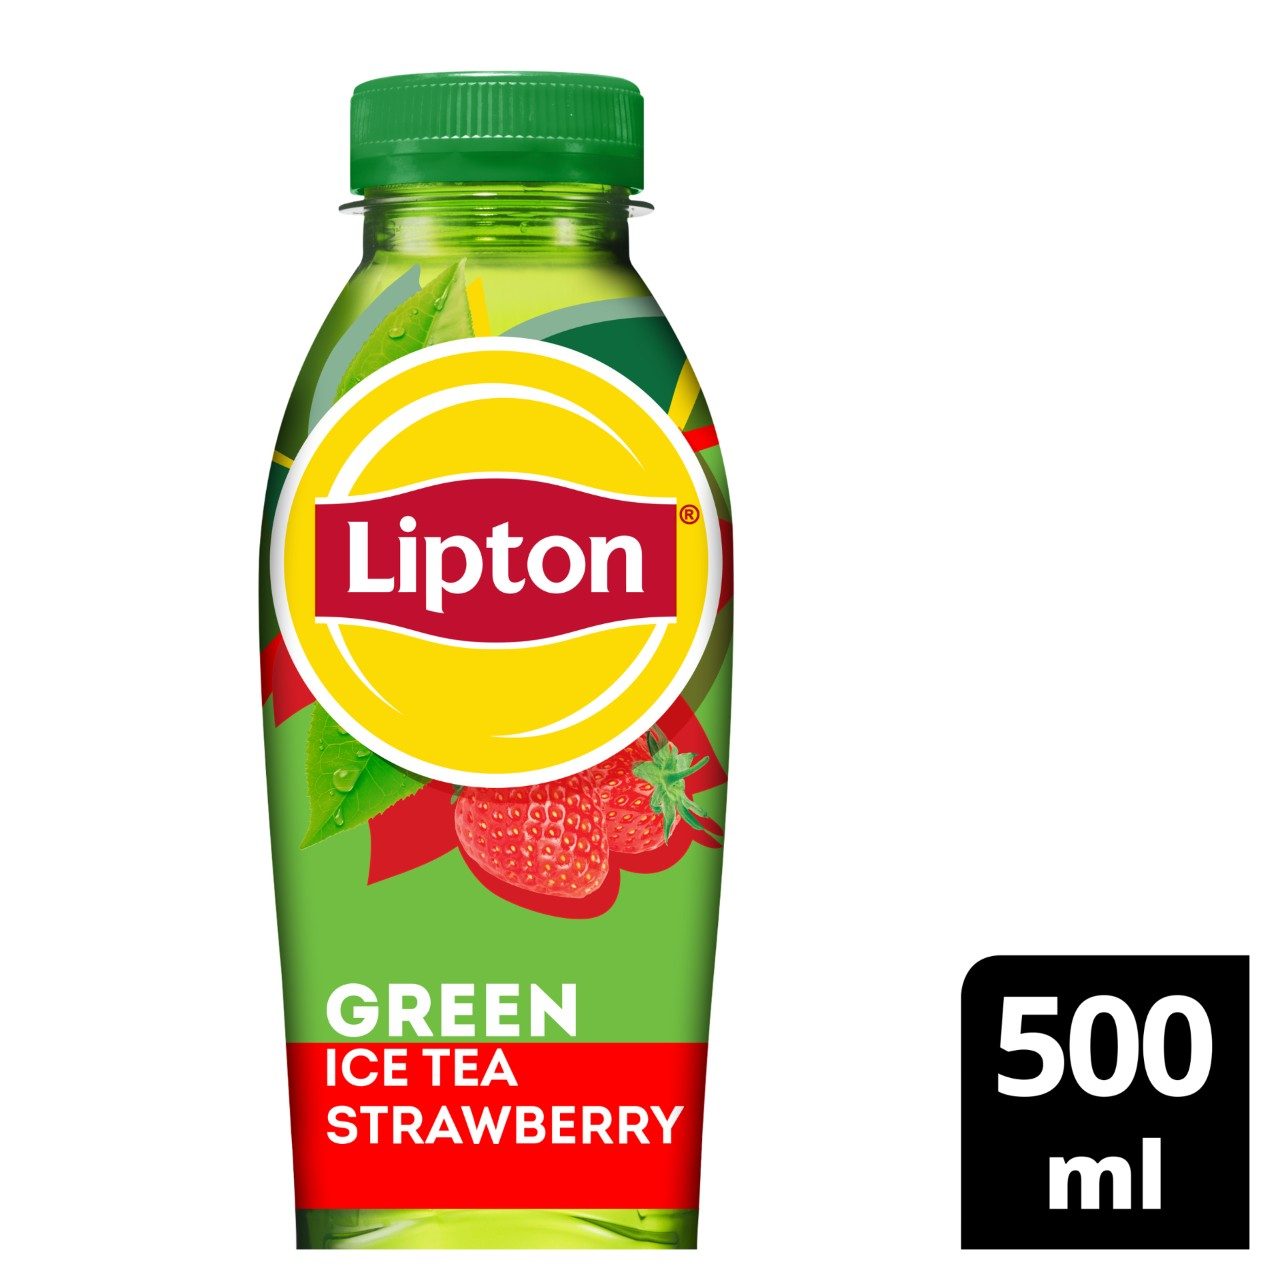 Lipton Ice Tea Green Strawberry